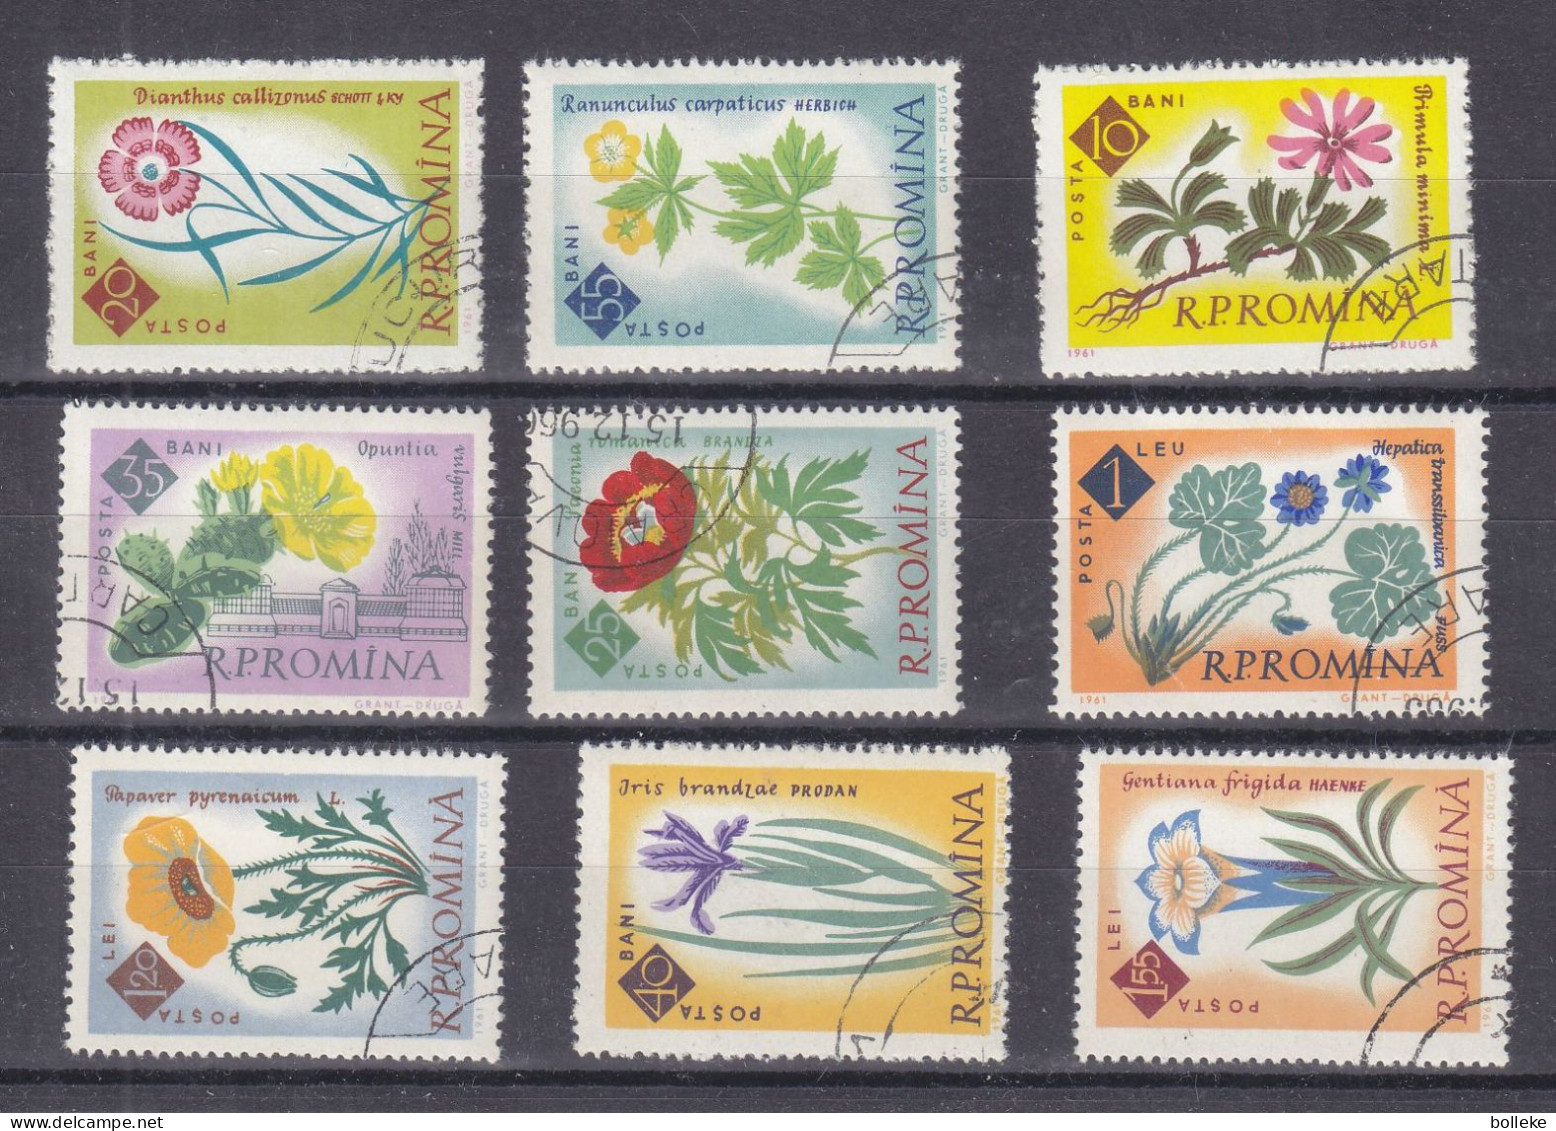 Roumanie - Yvert 1818 / 36 Oblitéré - Fleurs - Valeur 3,00 Euros - Oblitérés